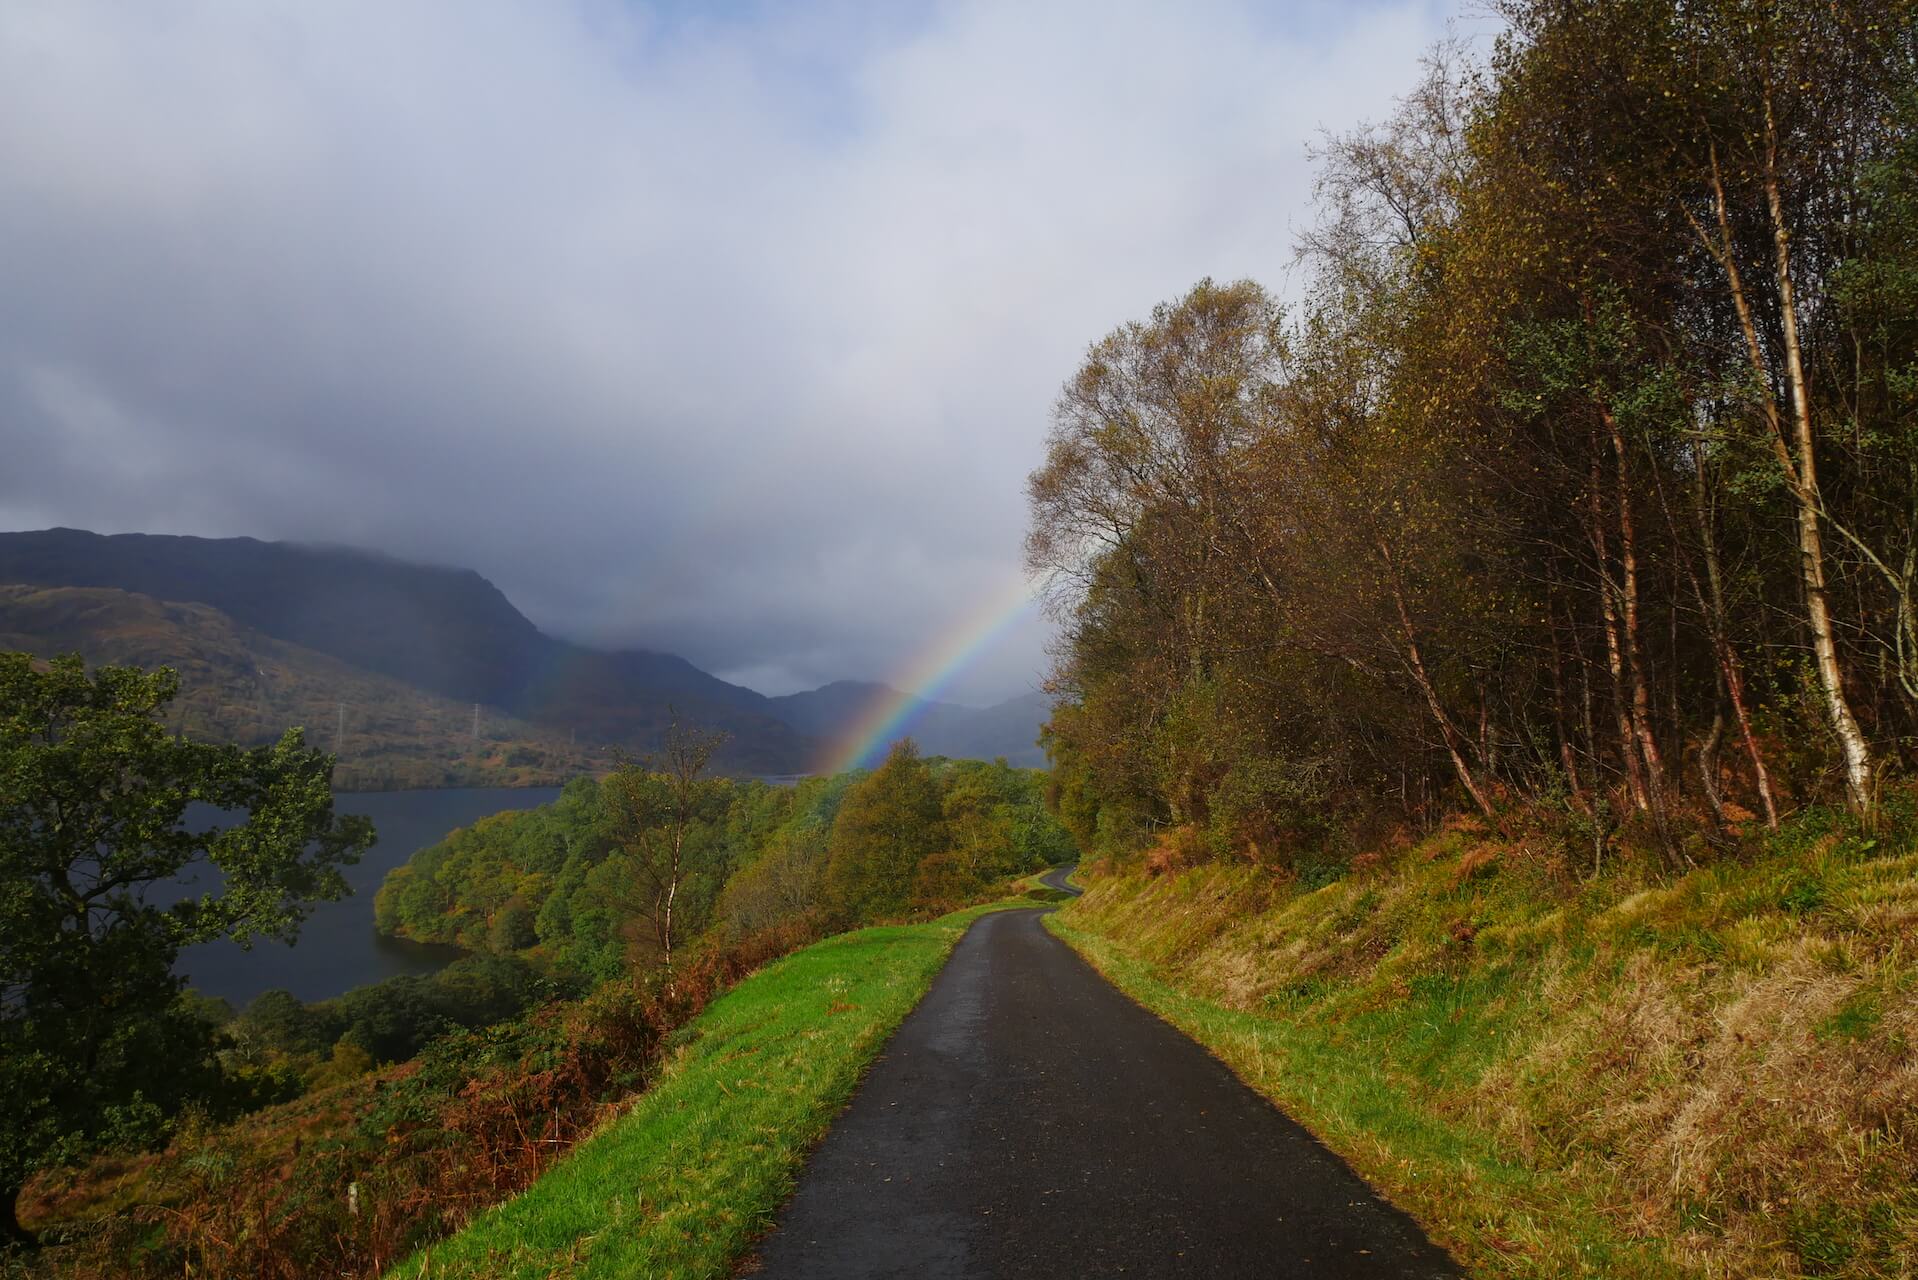 Rainbow over the road along Loch Katrine